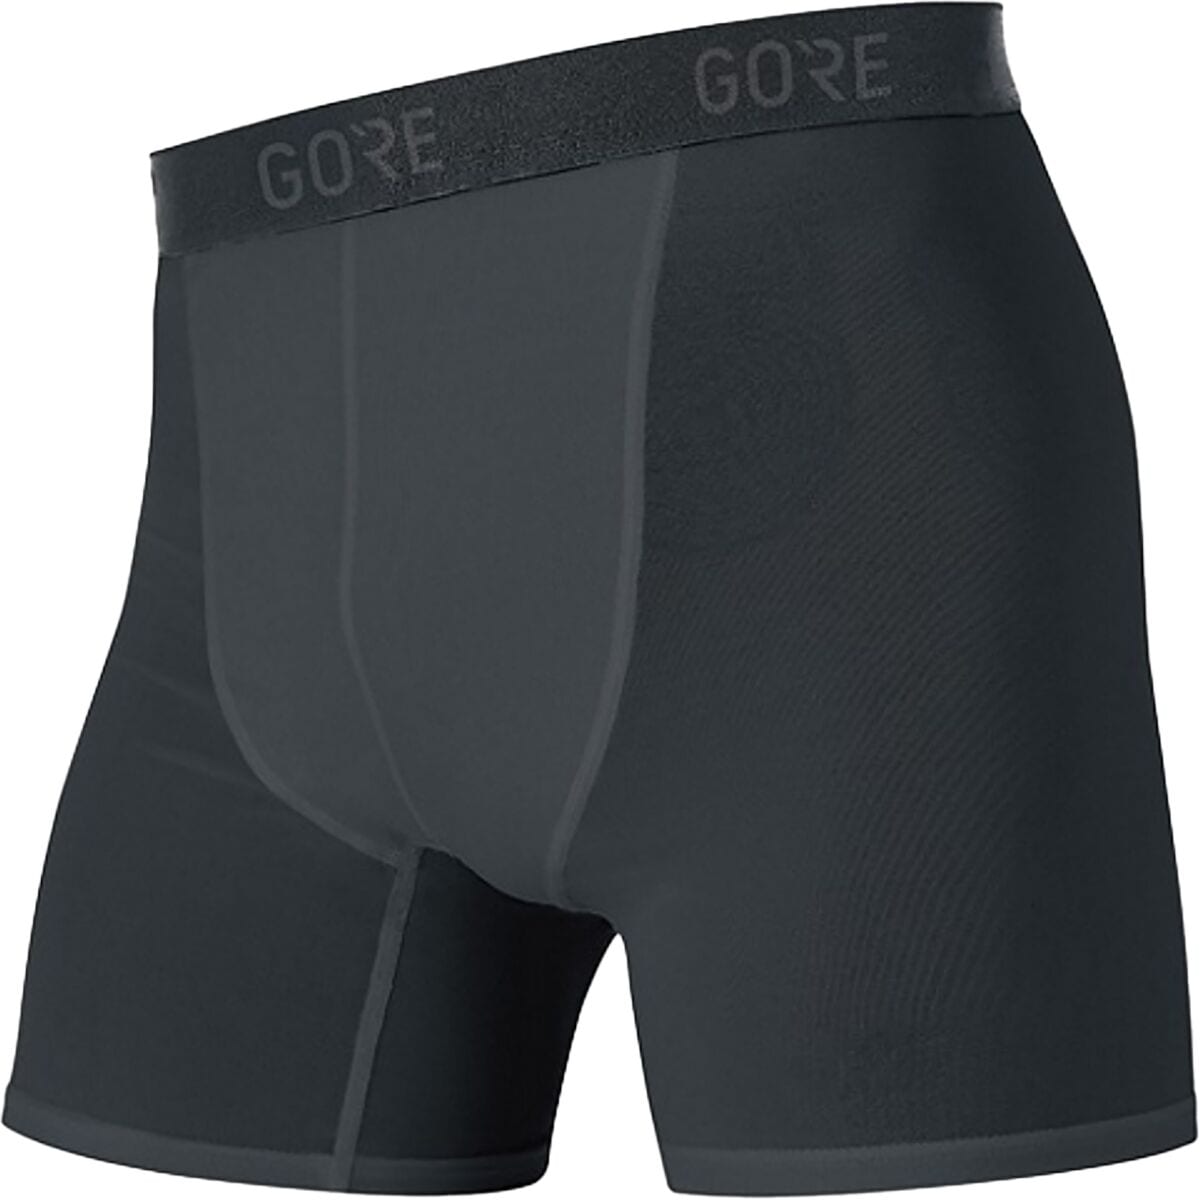 Gore Wear Base Layer Boxer Short - Men's